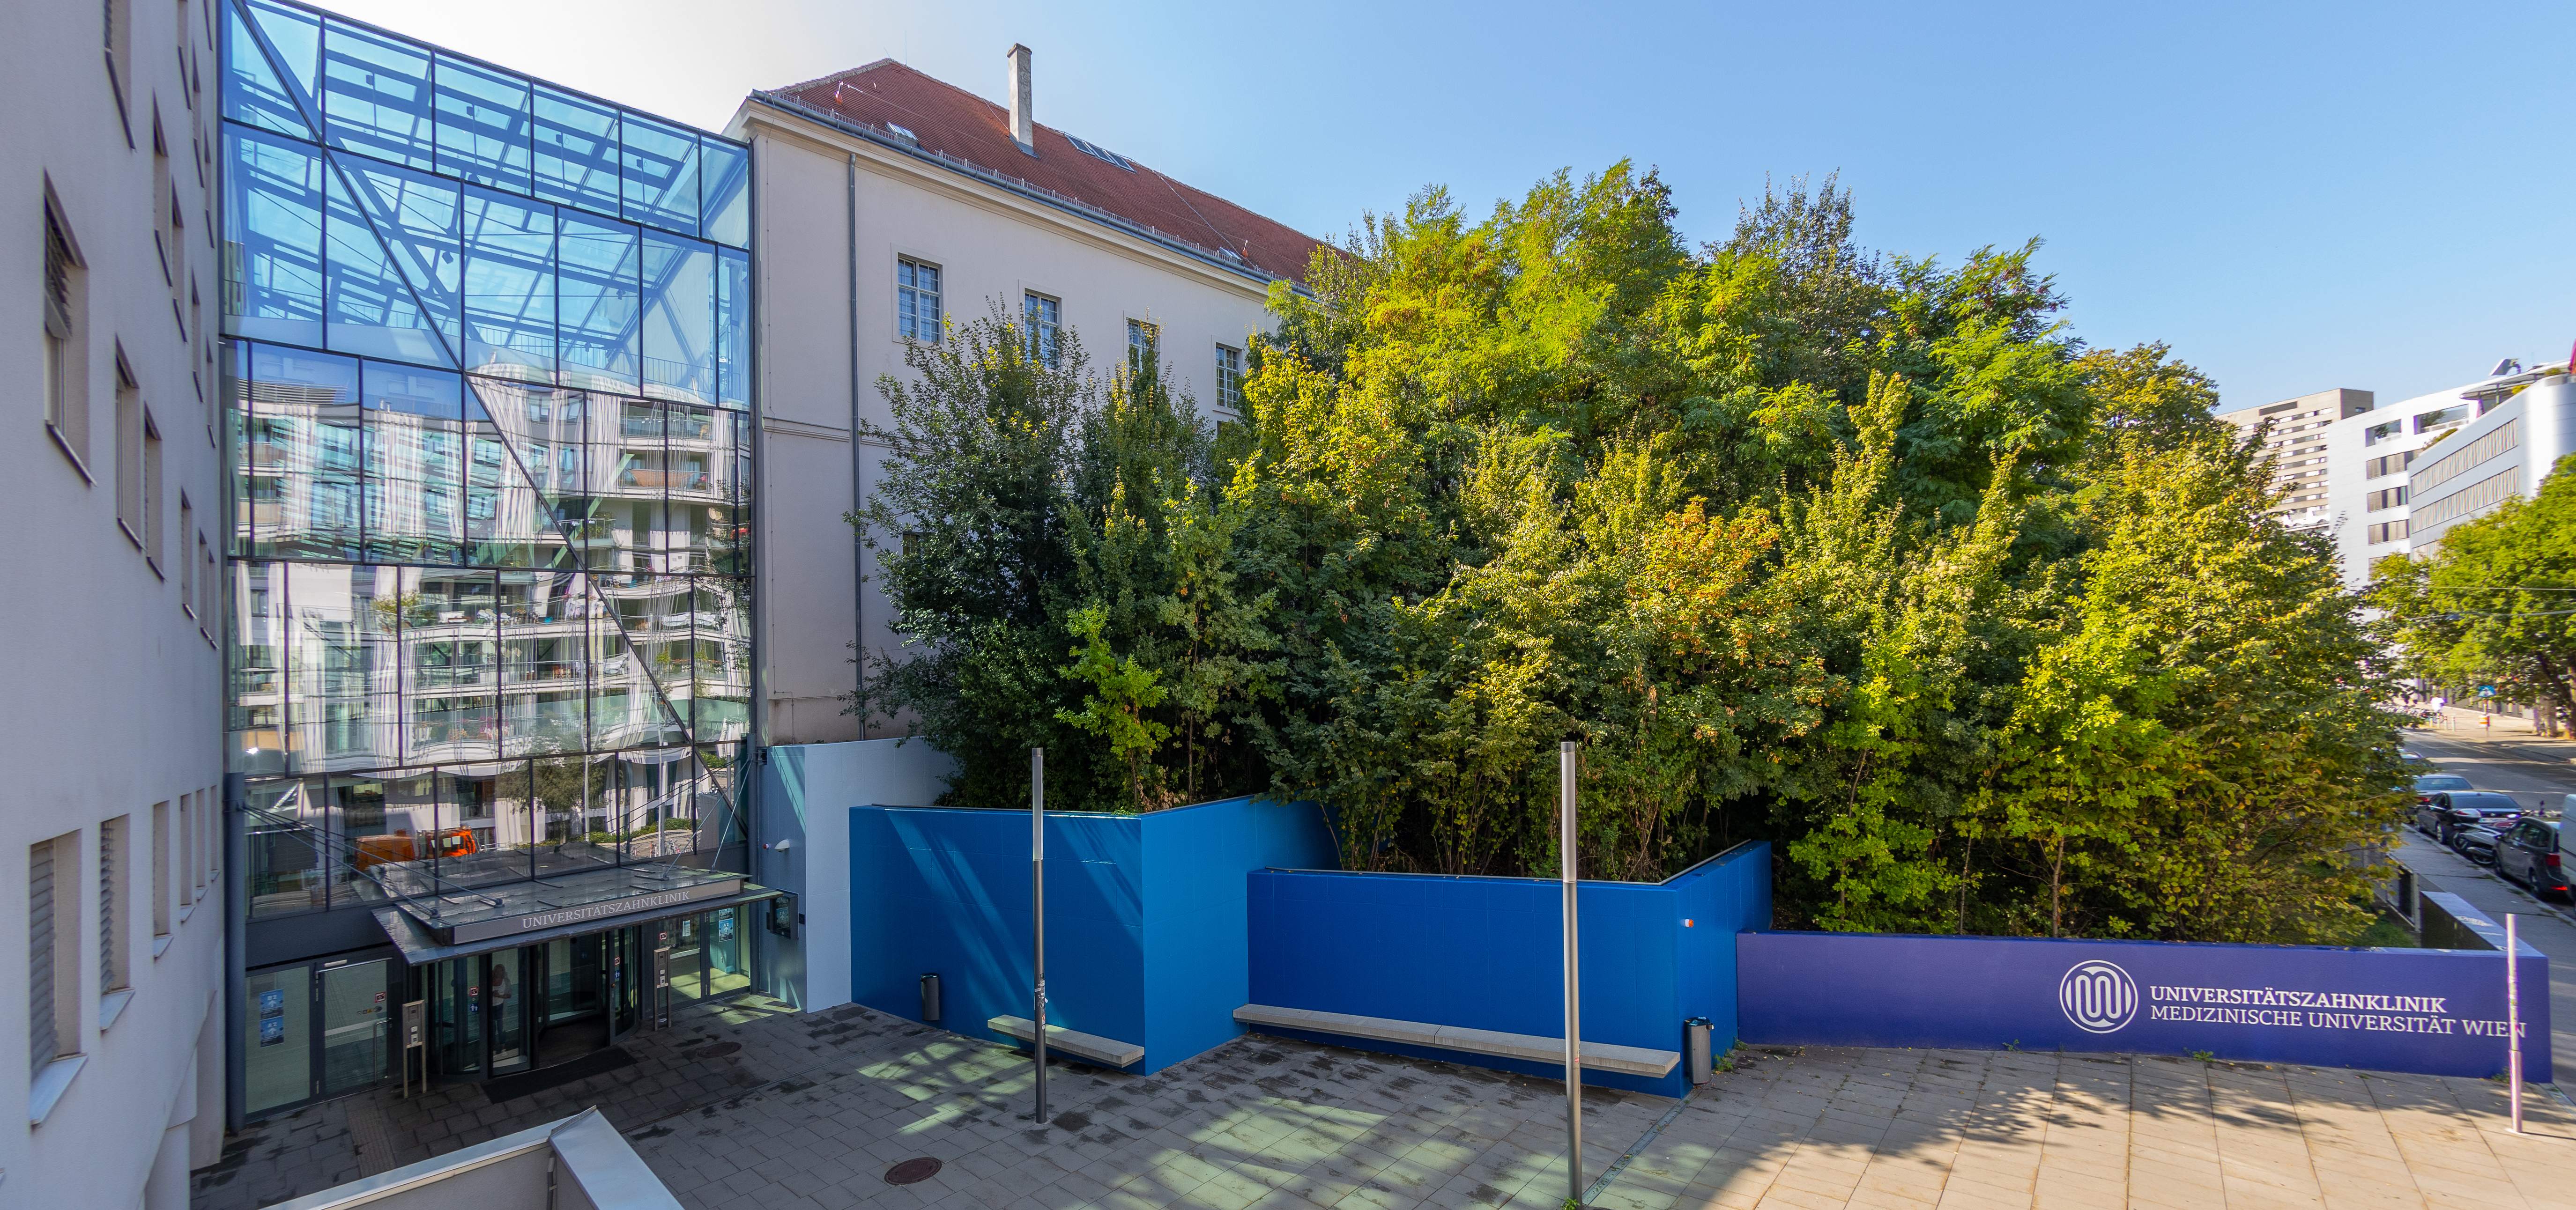 The University Clinic of Dentistry Vienna